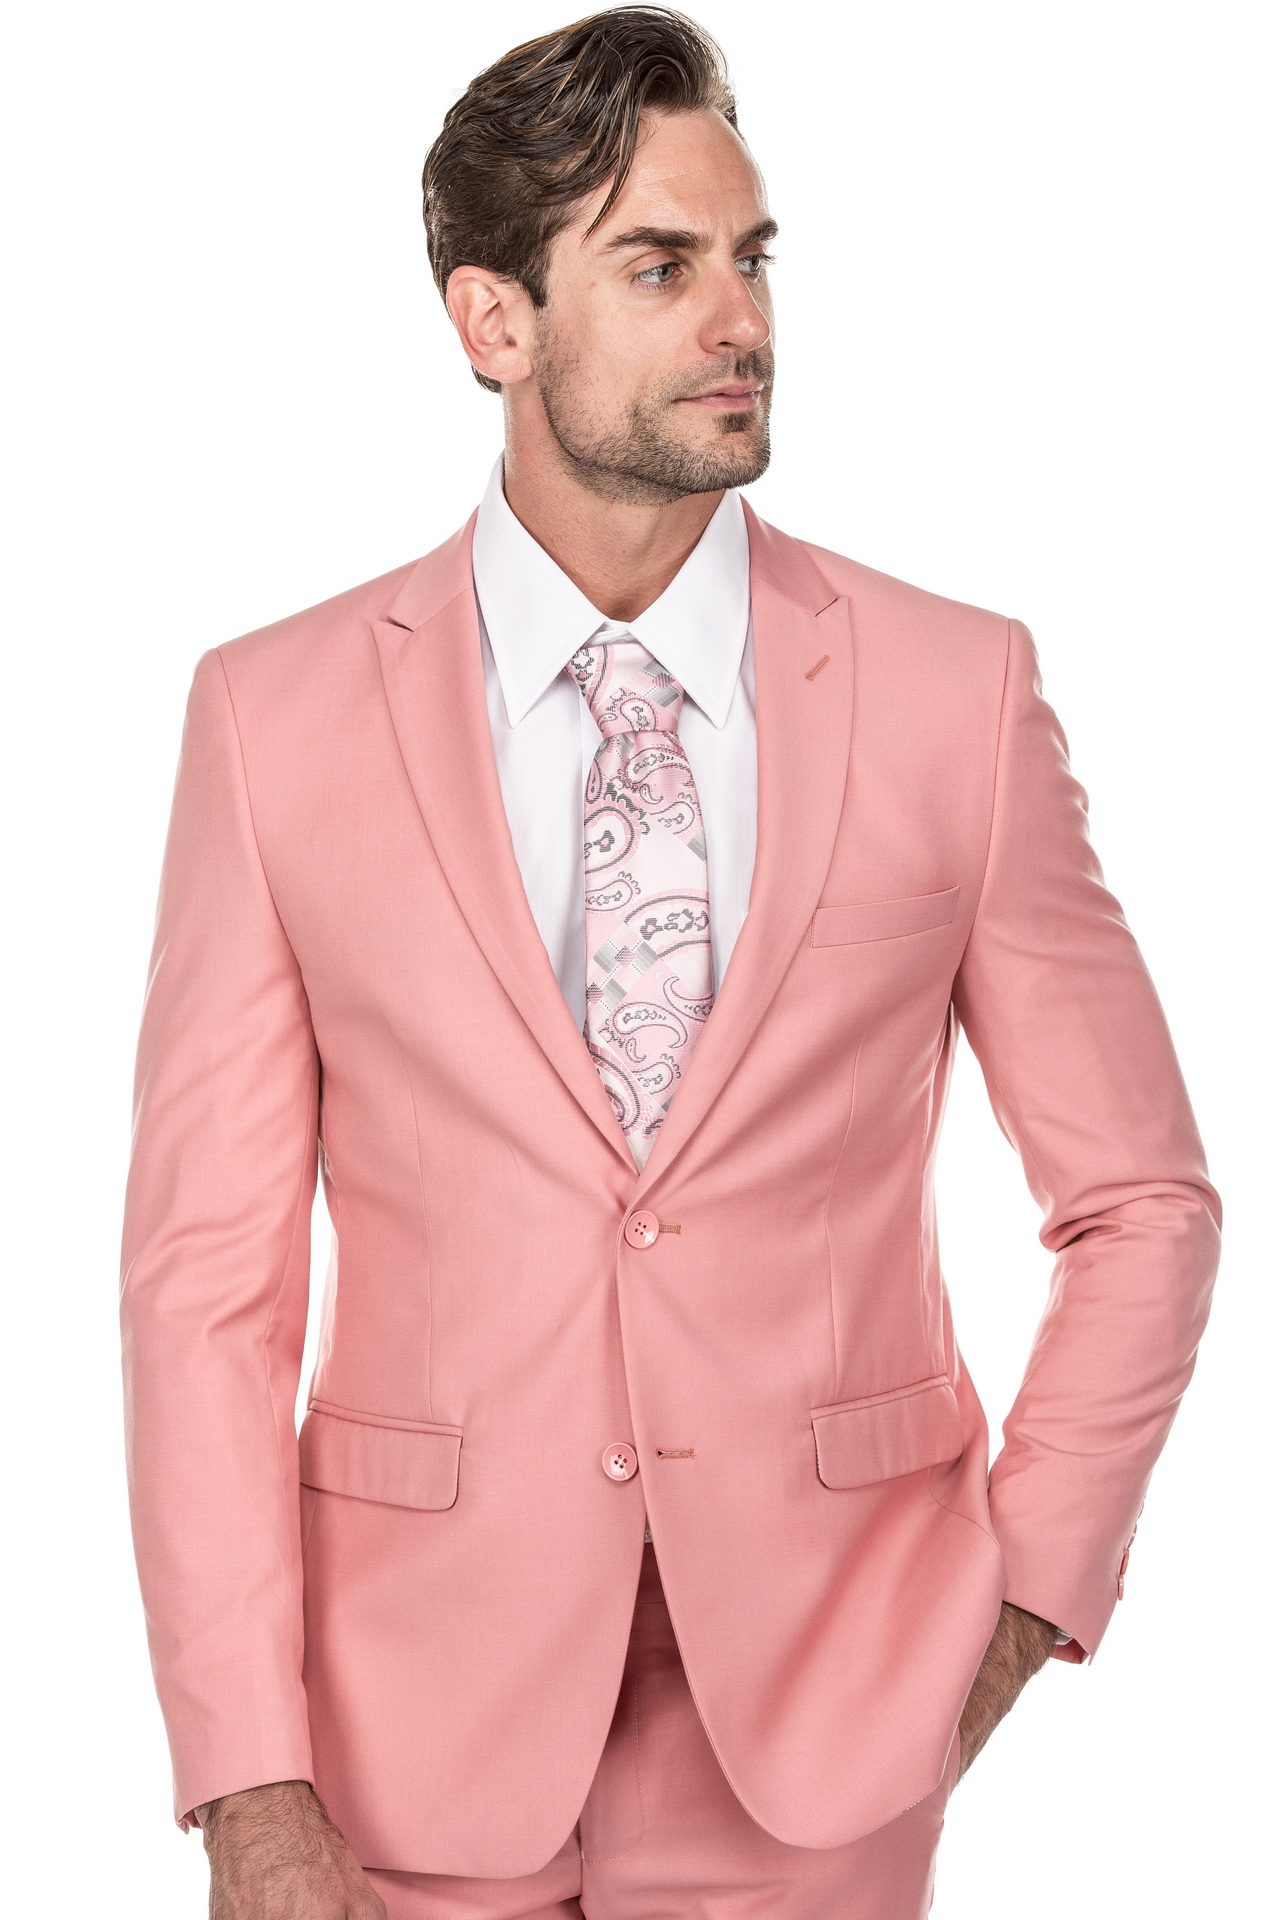 Anton Alexander Pink with White Dress Shirts | Pink Modern Shirts | Bright Pink  Dress Shirts | Pink and White Mens Shirts (XS Modern Fit) at Amazon Men's  Clothing store